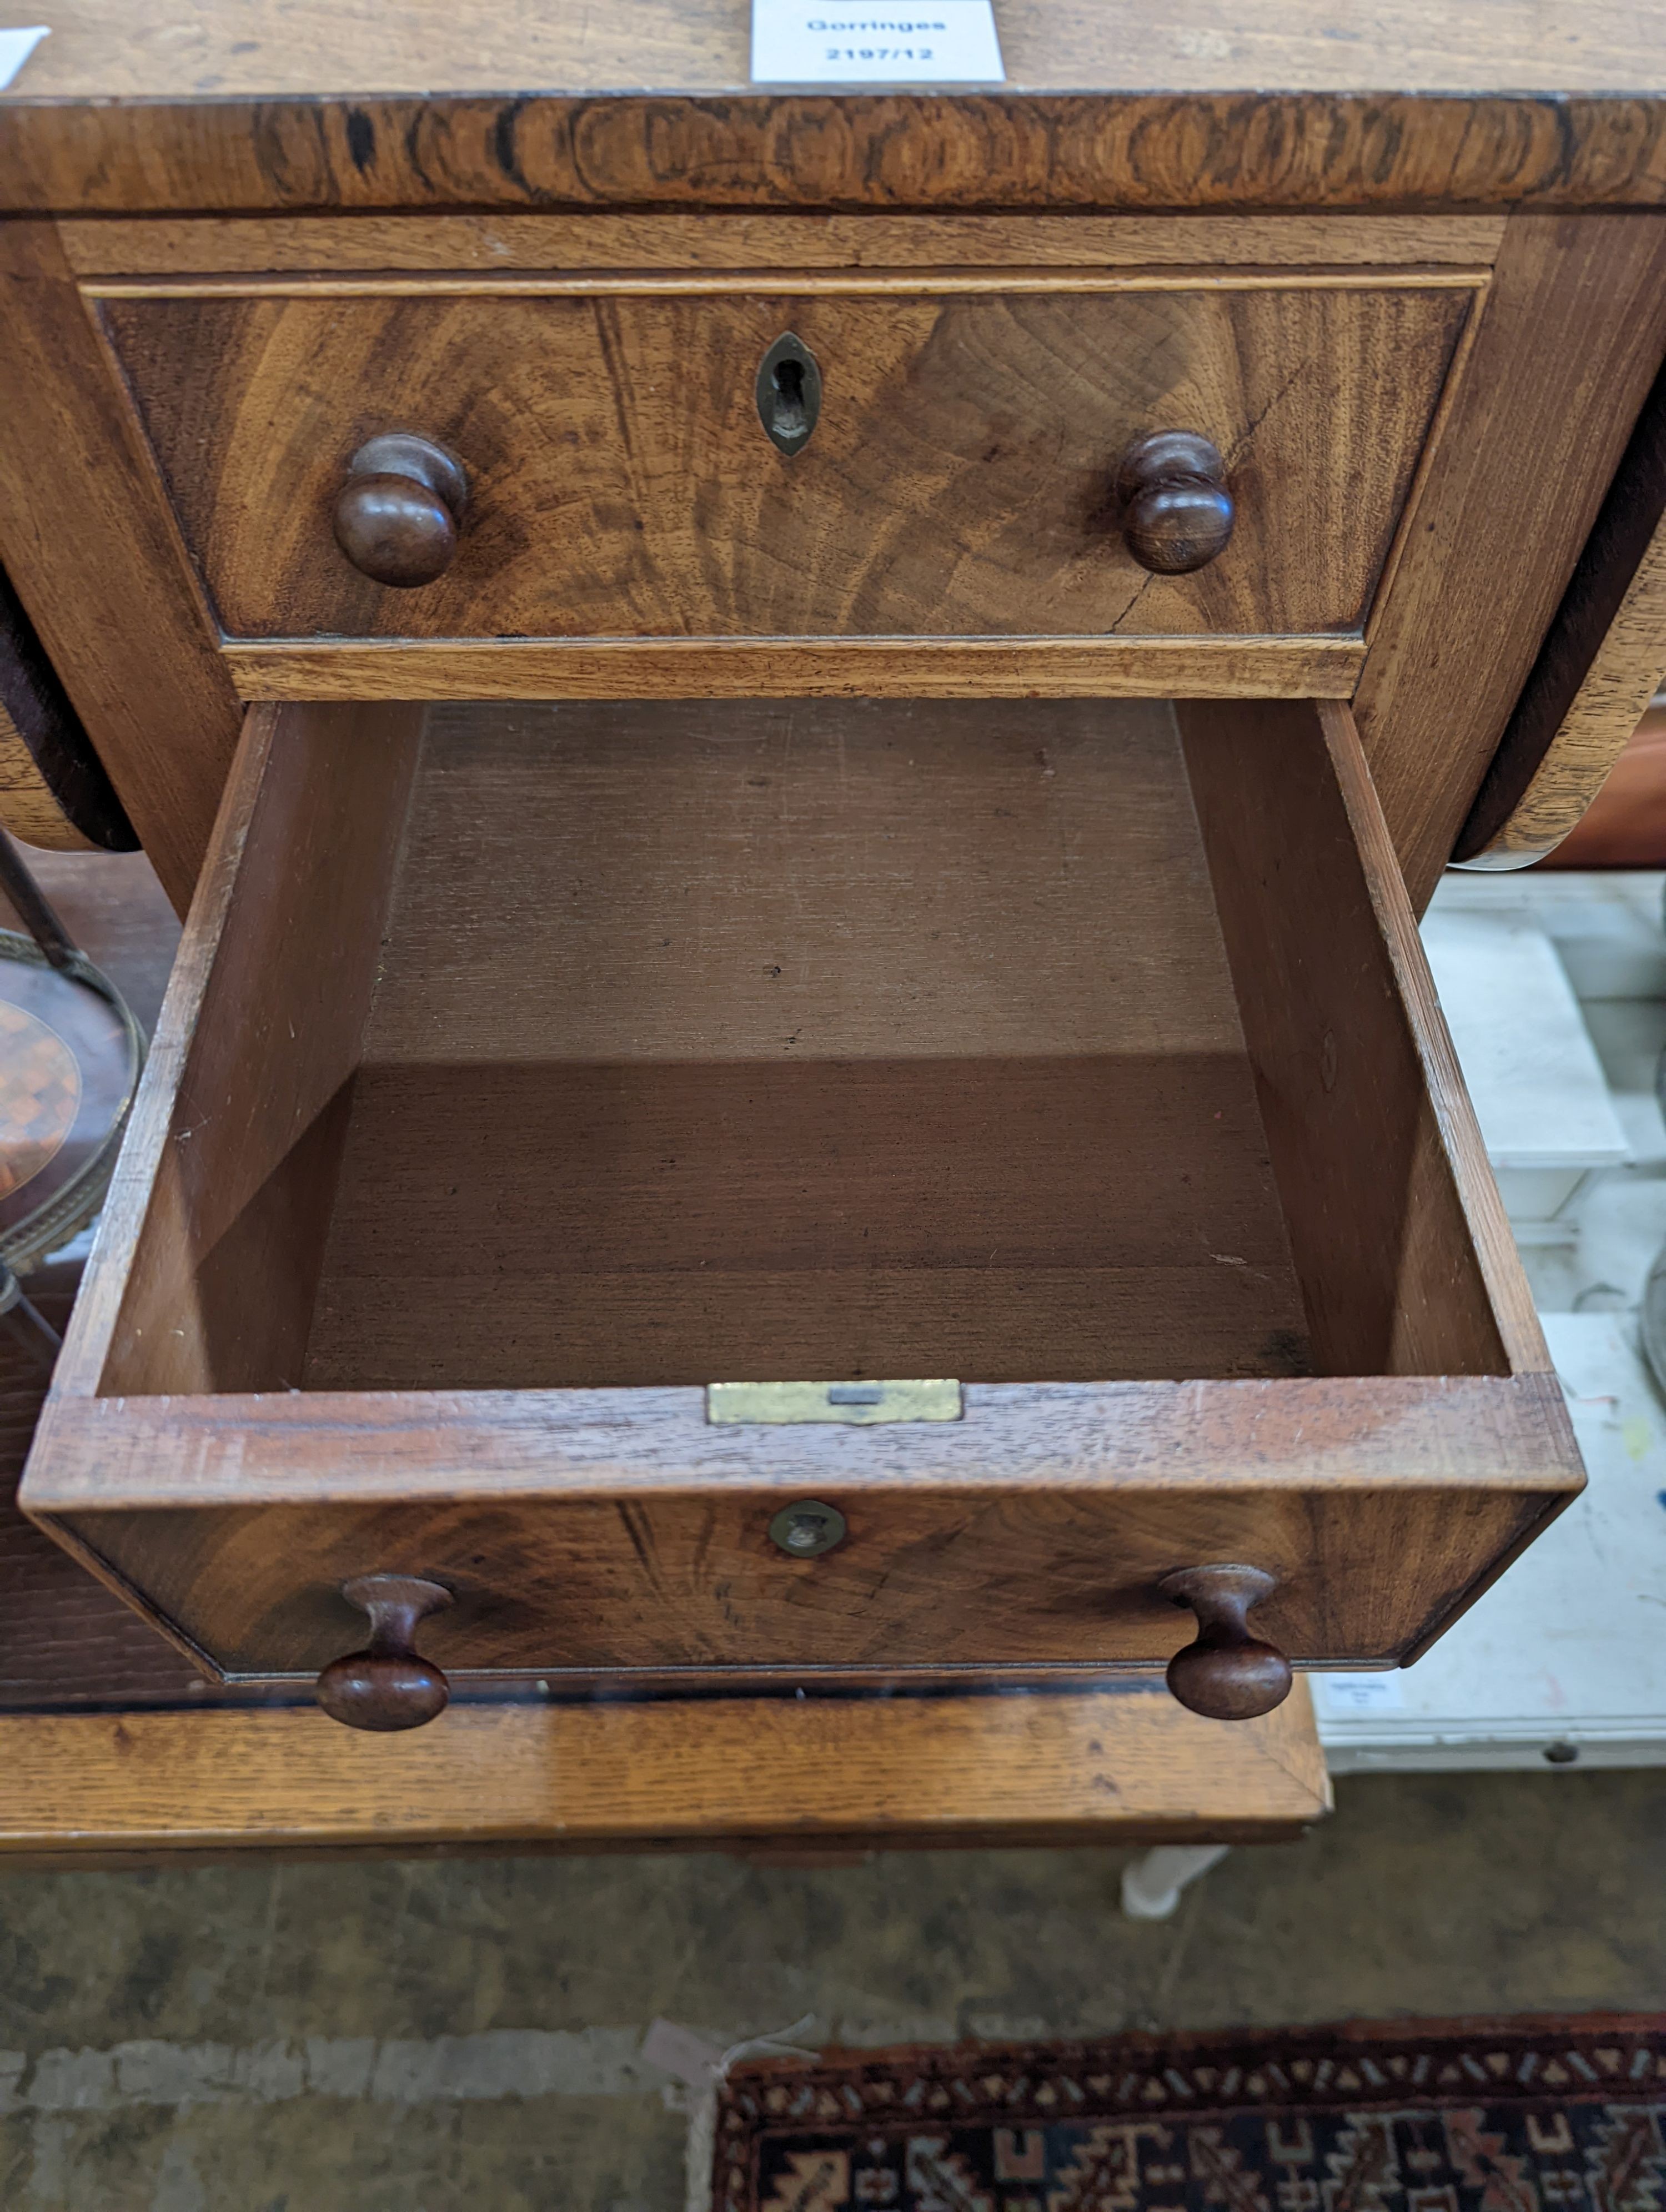 A Regency mahogany drop flap work table, width 38cm, depth 50cm, height 74cm